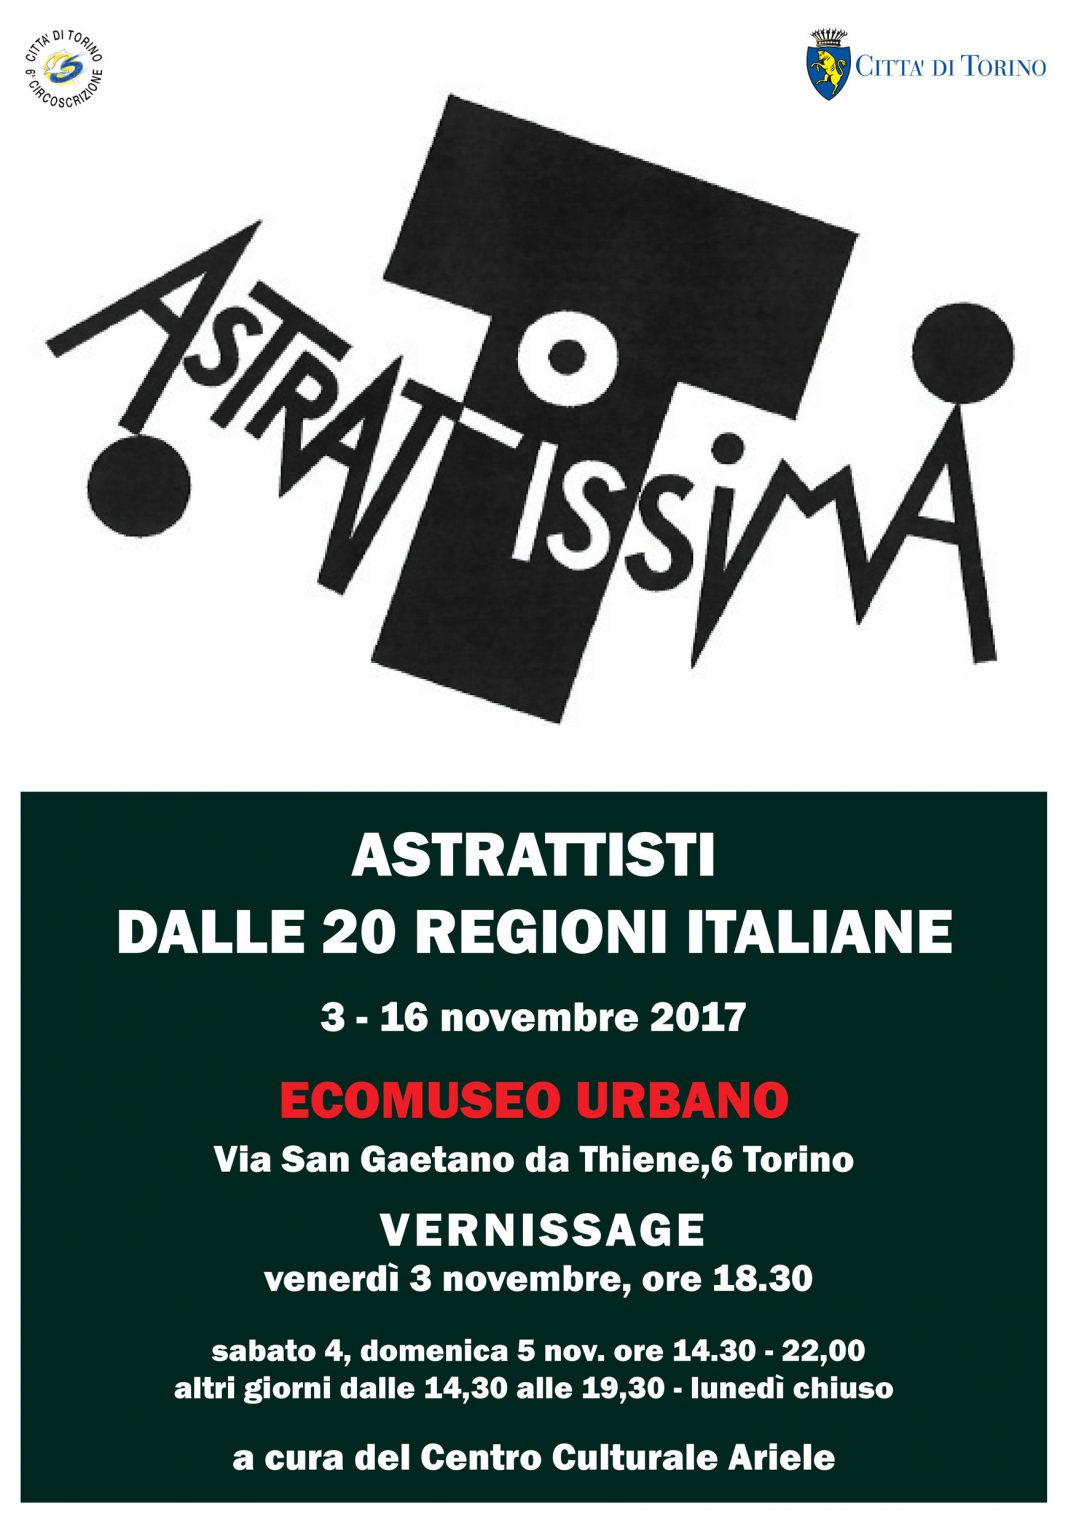 Astrattissimahttps://www.exibart.com/repository/media/eventi/2017/10/astrattissima-1068x1524.jpg